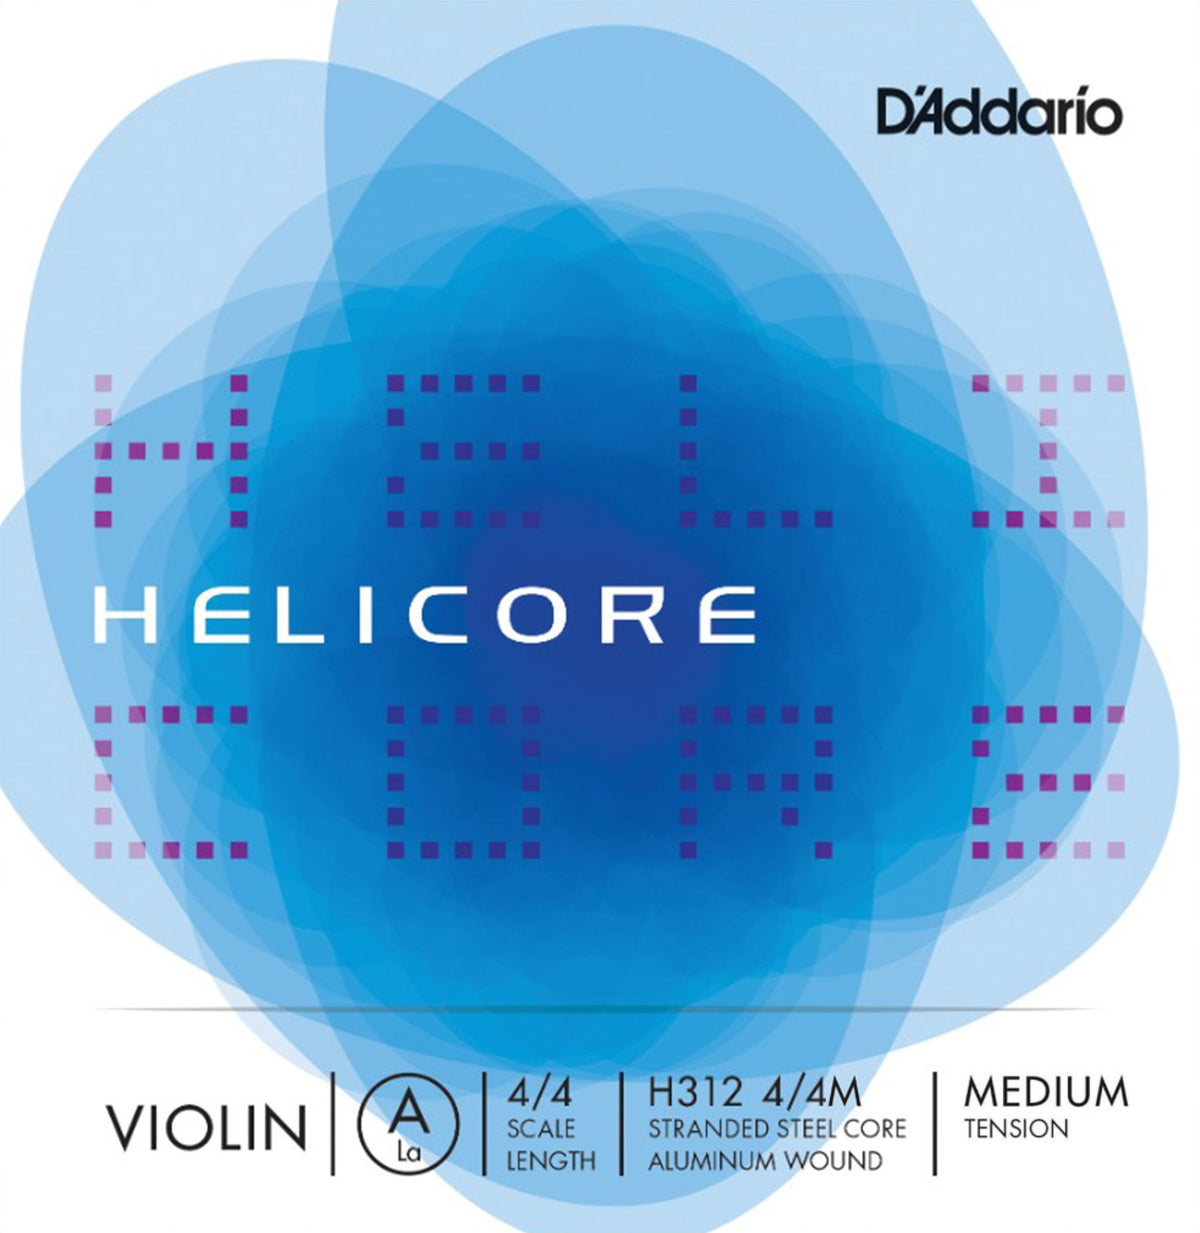 D'Addario Helicore Violin A String, Aluminum Wound